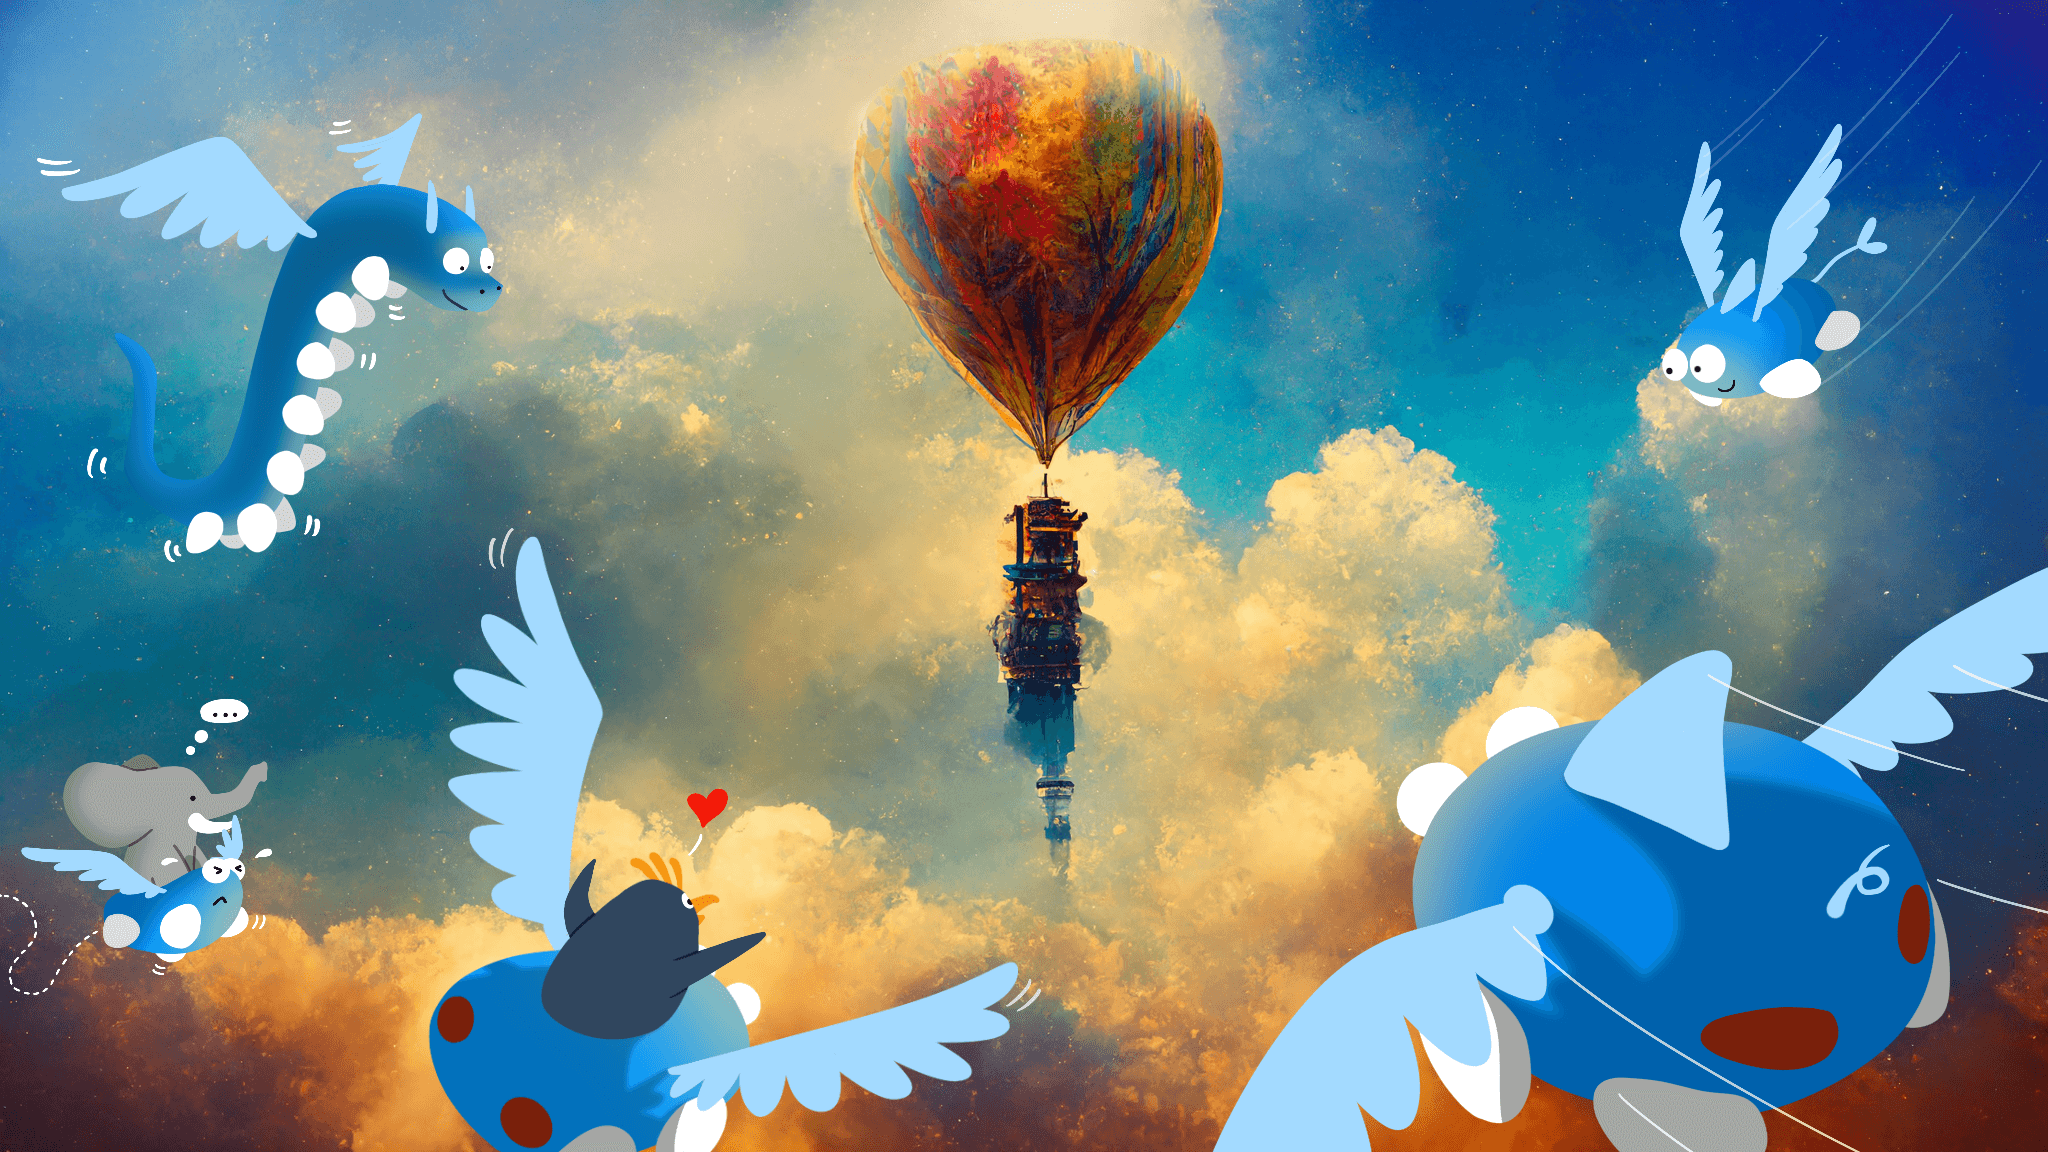 AI Dreams 002: A Big Balloon Castle in the Sky